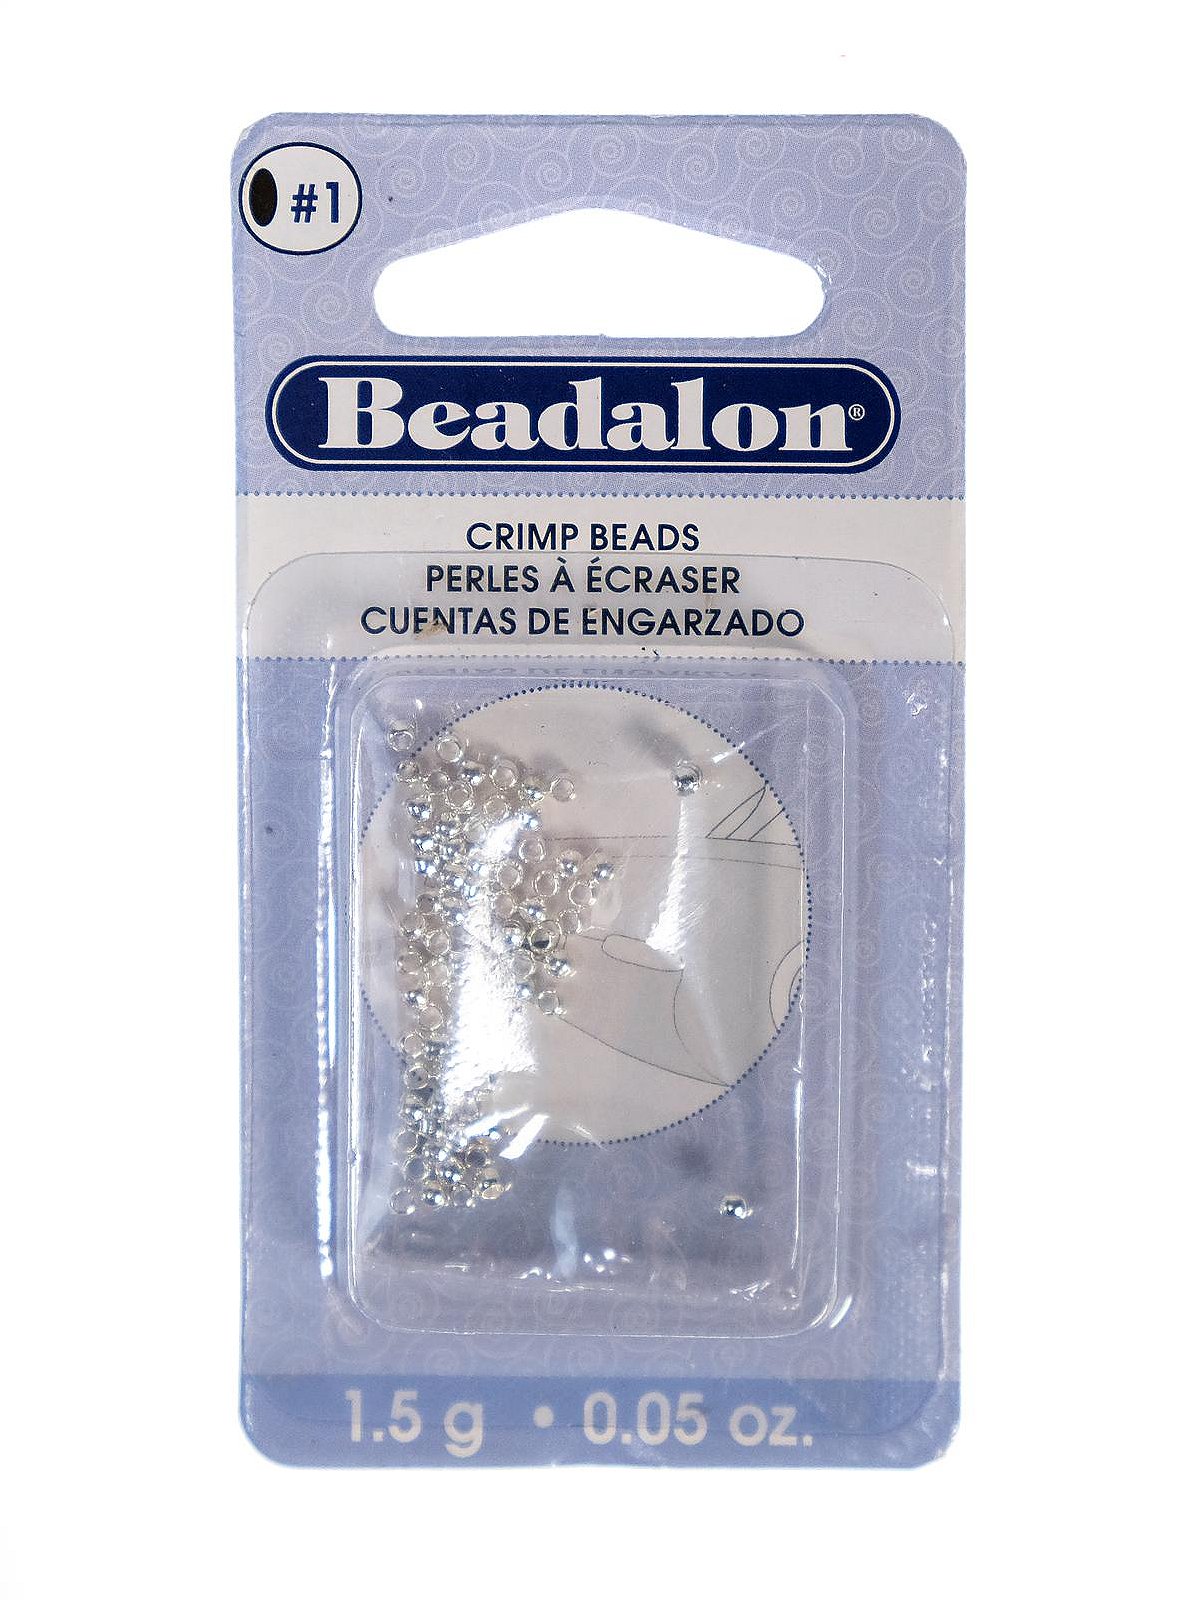 Beadalon Crimp Beads Size 1 1.5g Silver-Plated